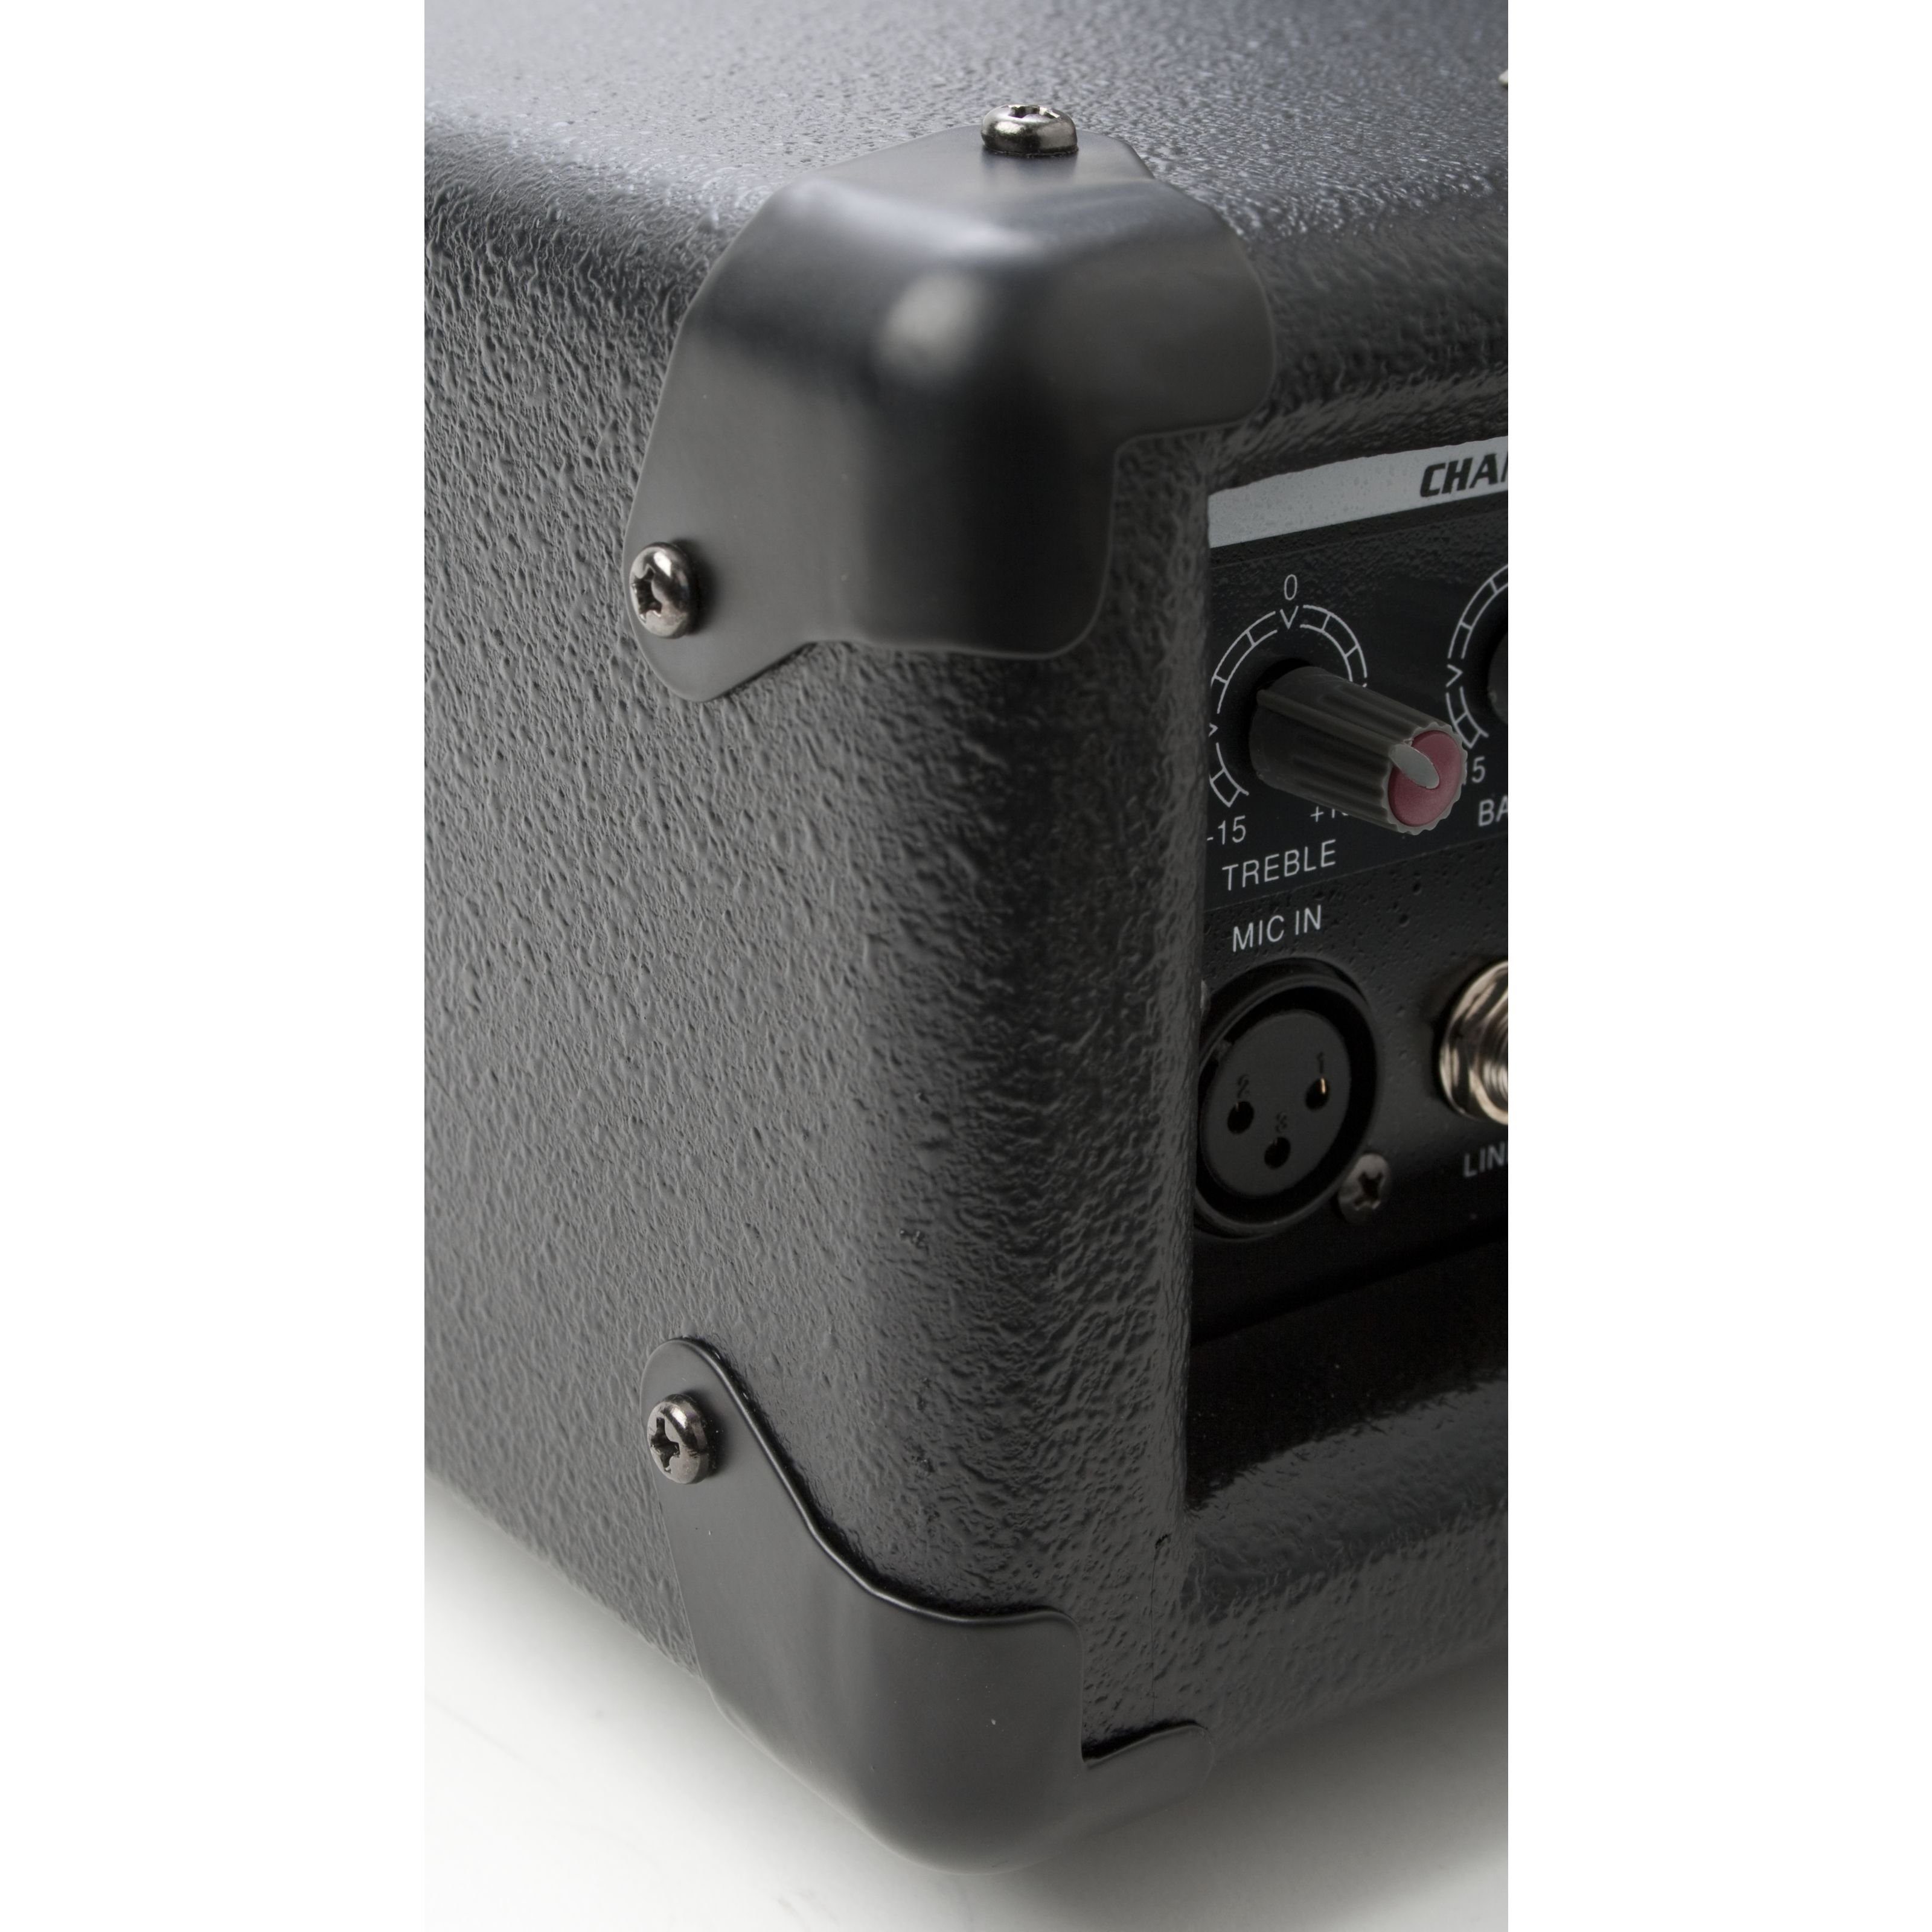 Fame Audio Lautsprechersystem (PM 400 Powermixer)